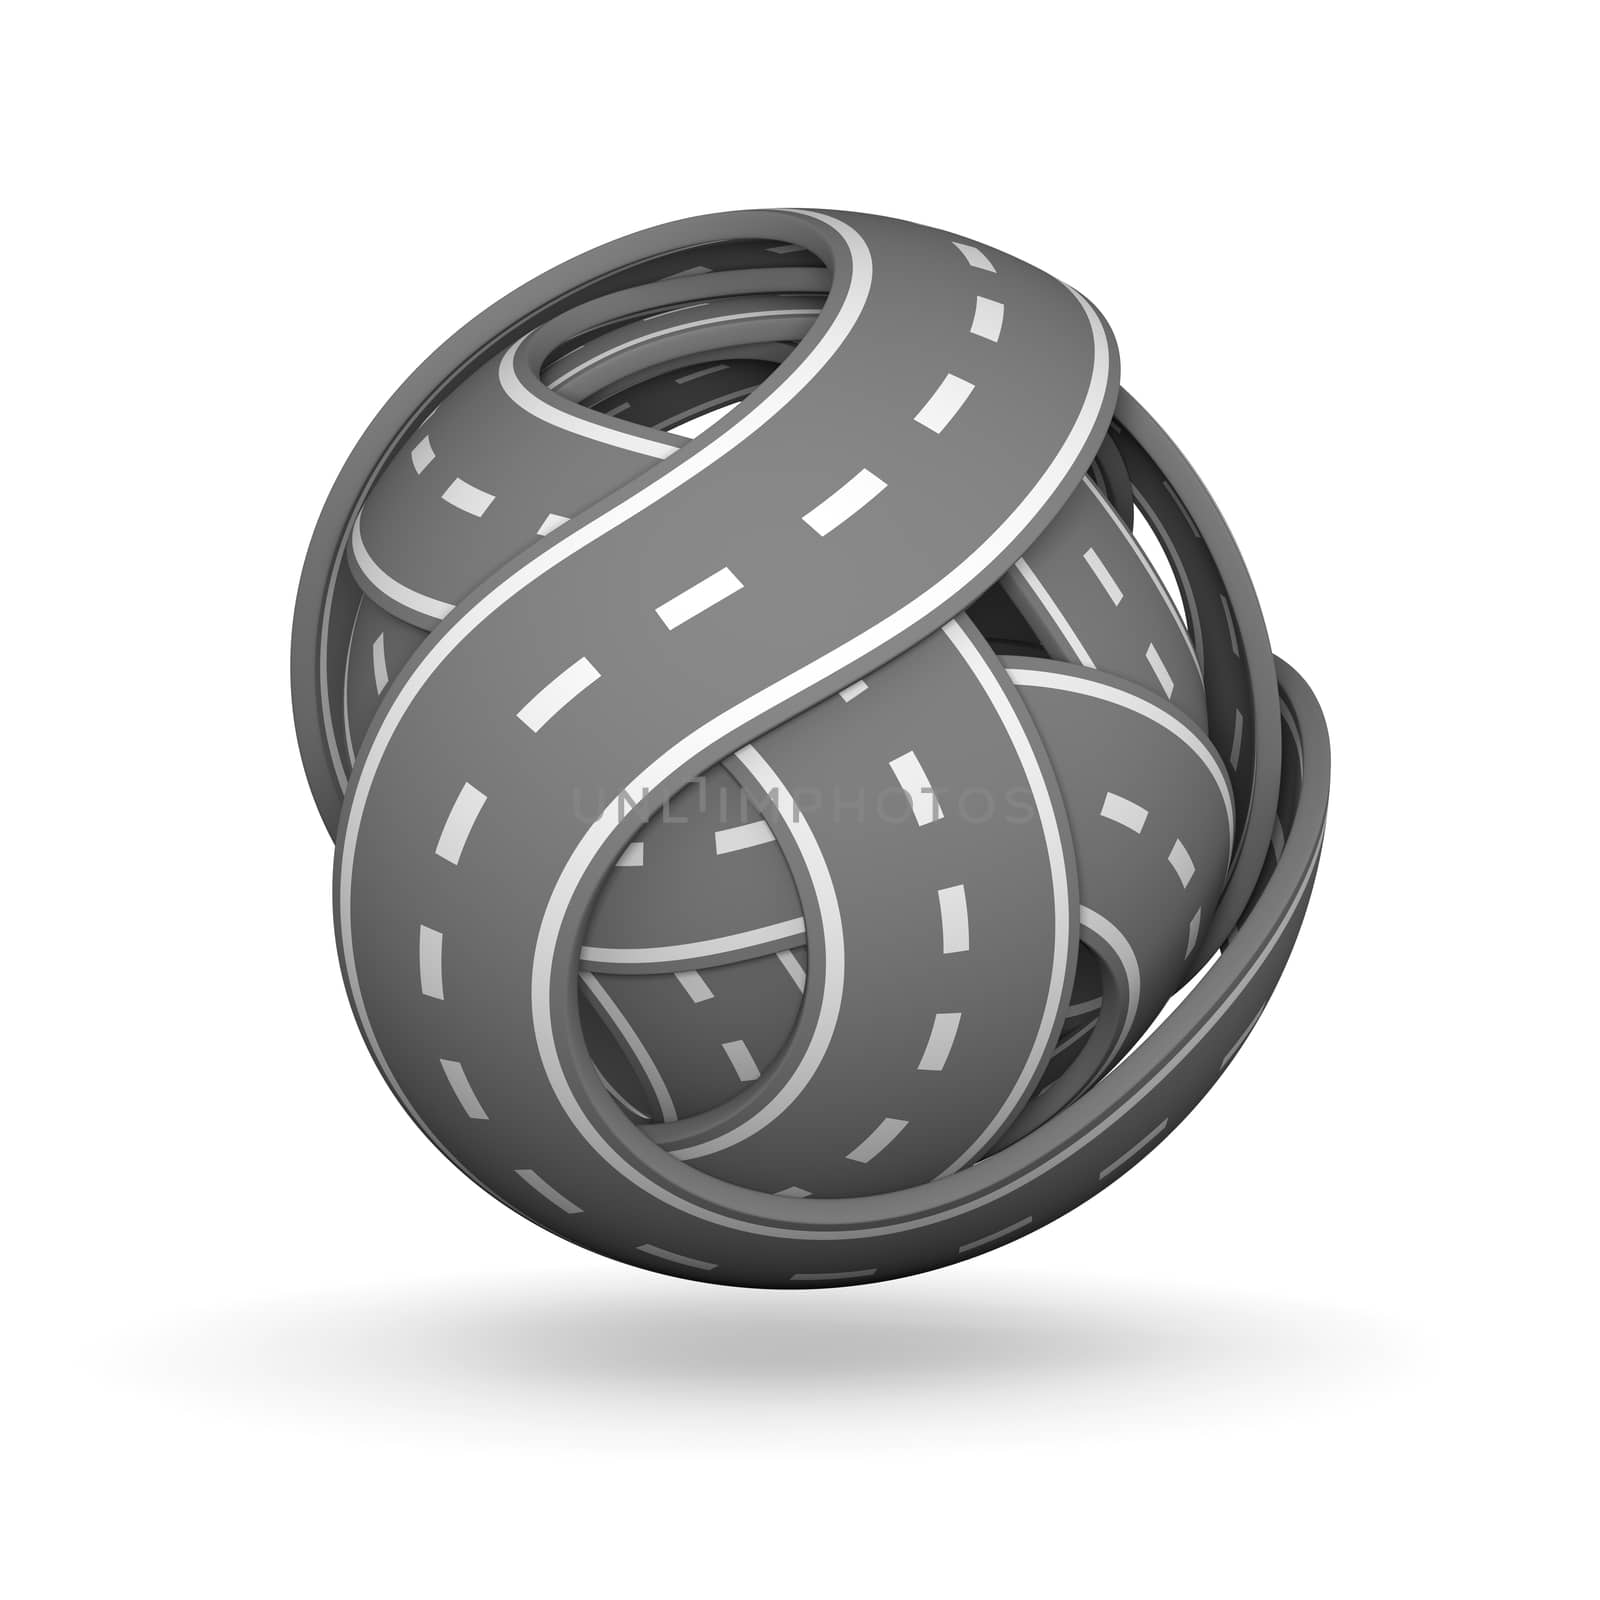 Ball of Roads 3D Illustration on White Background